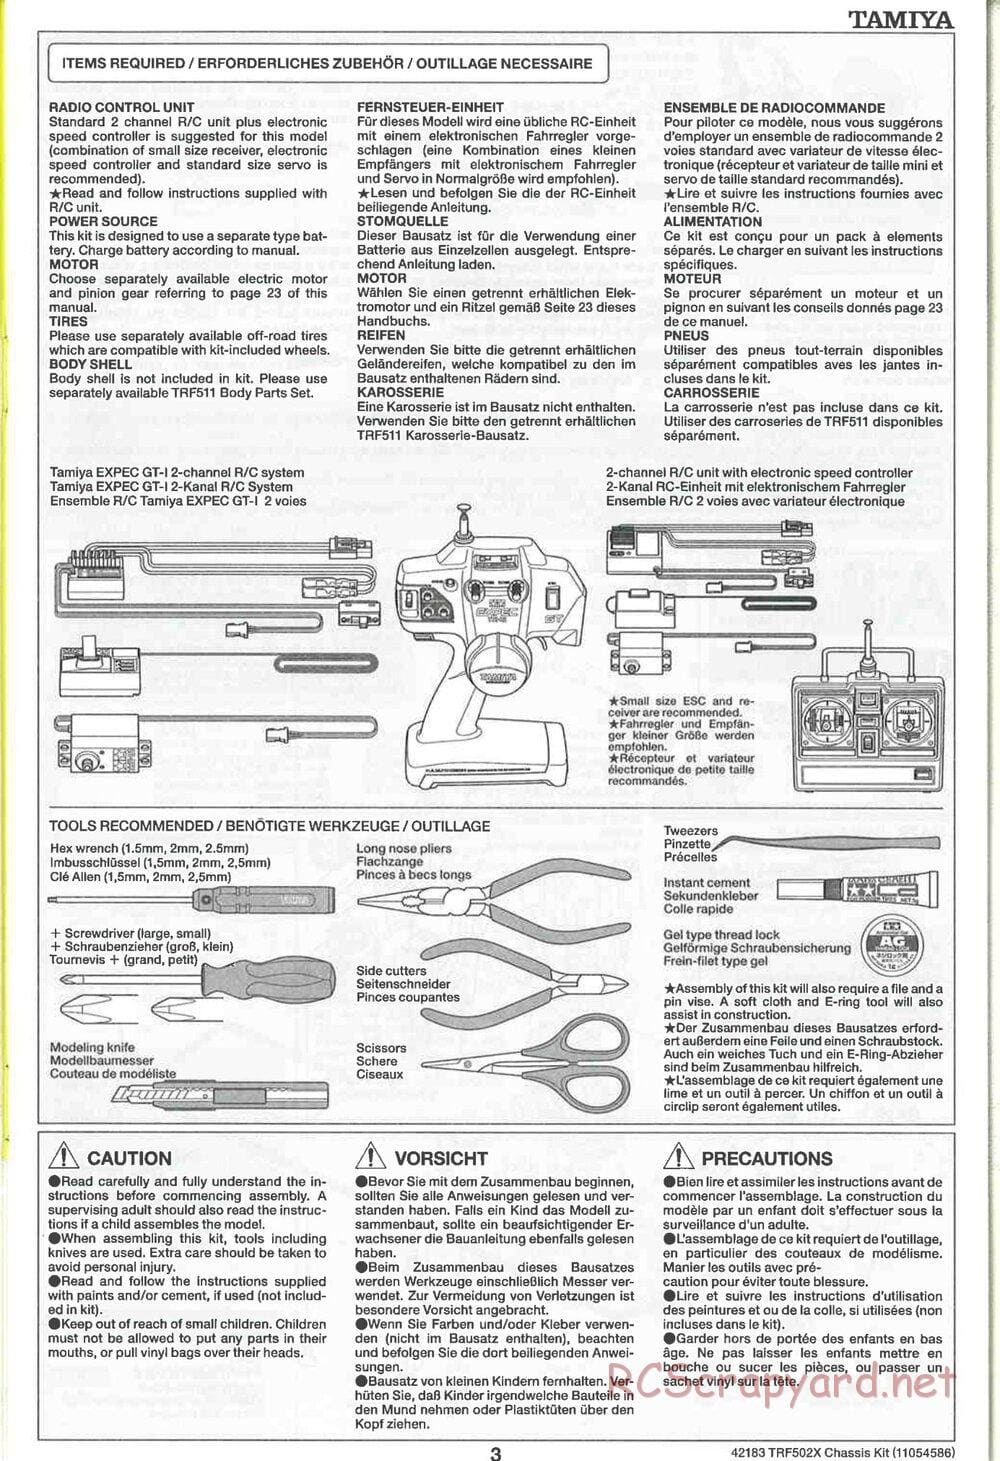 Tamiya - TRF502X Chassis - Manual - Page 3